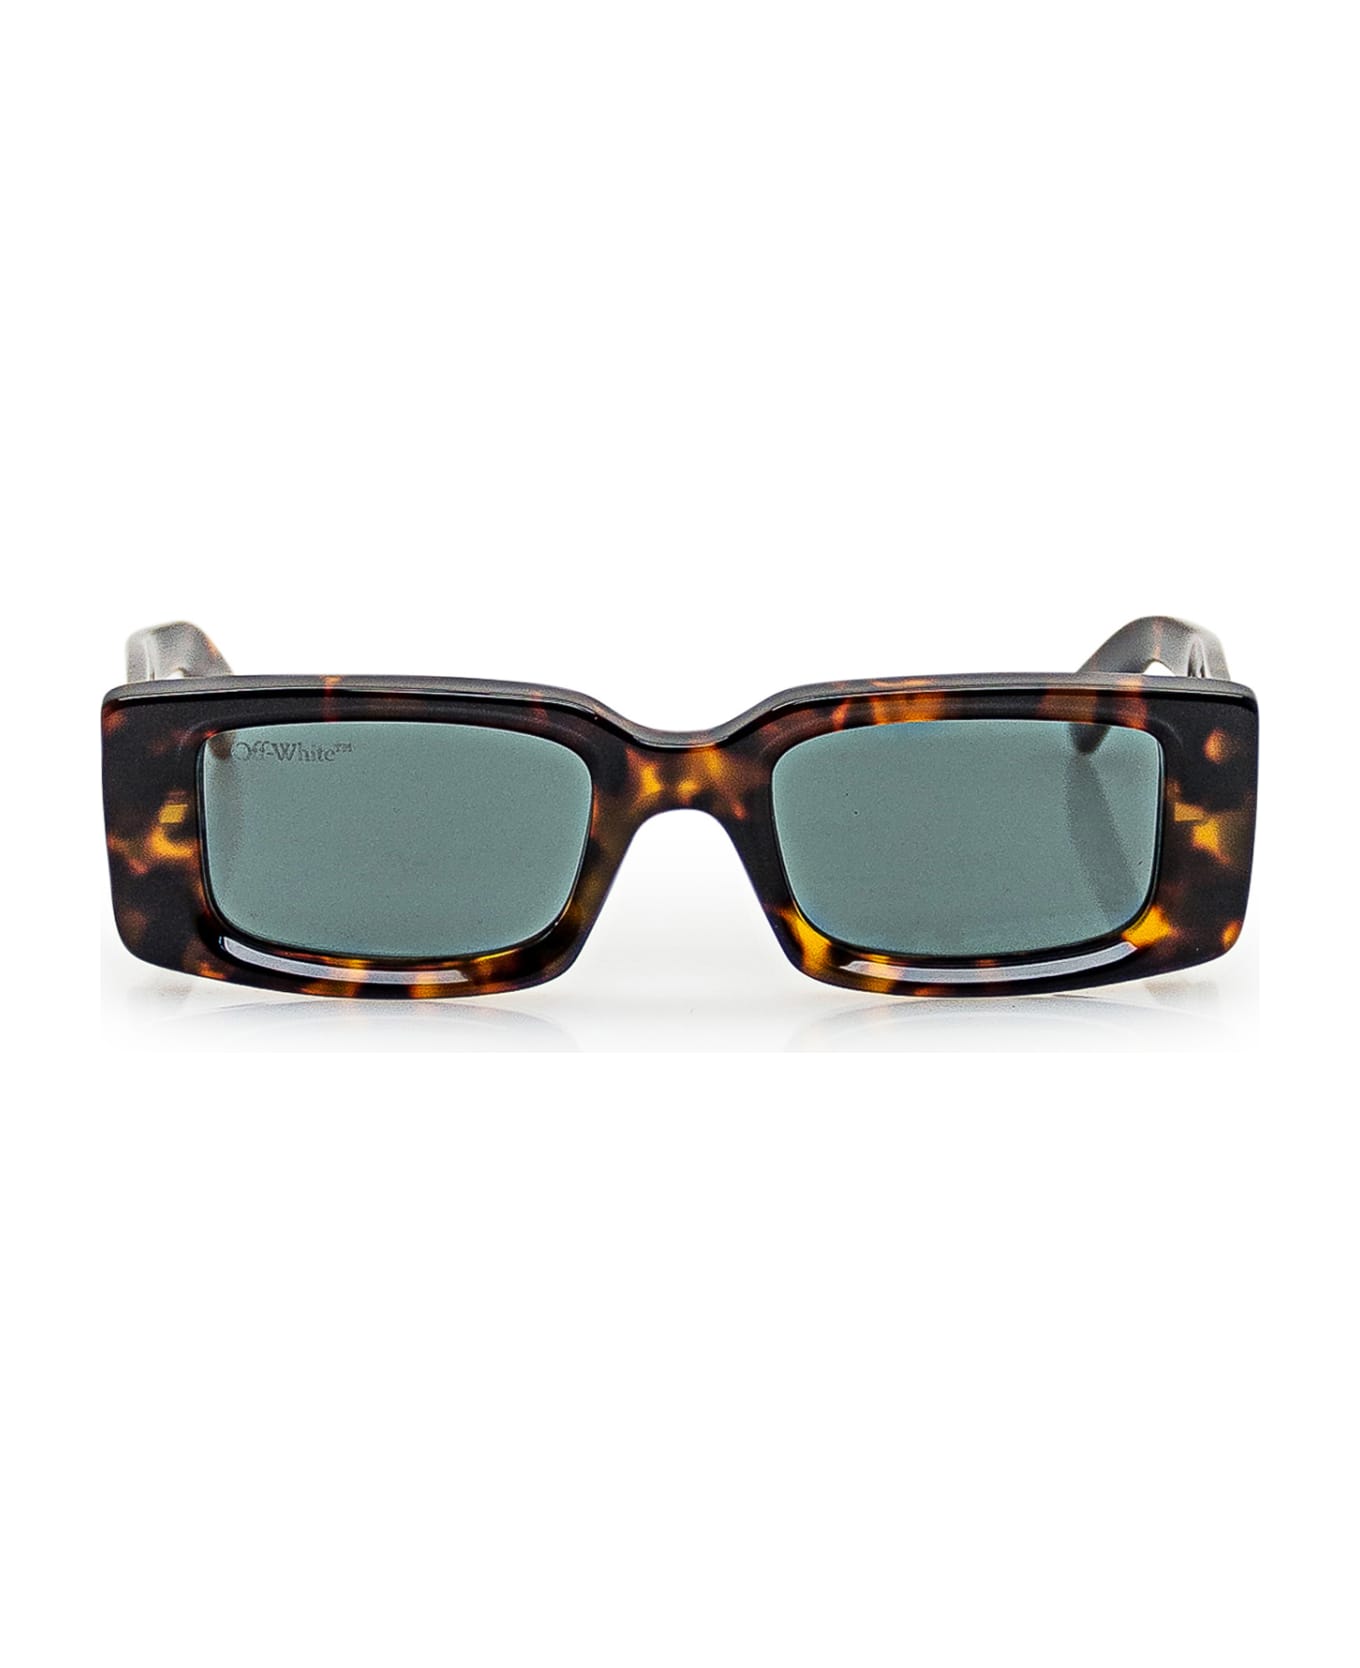 Off-White Arthur Sunglasses - 6455 HAVANA